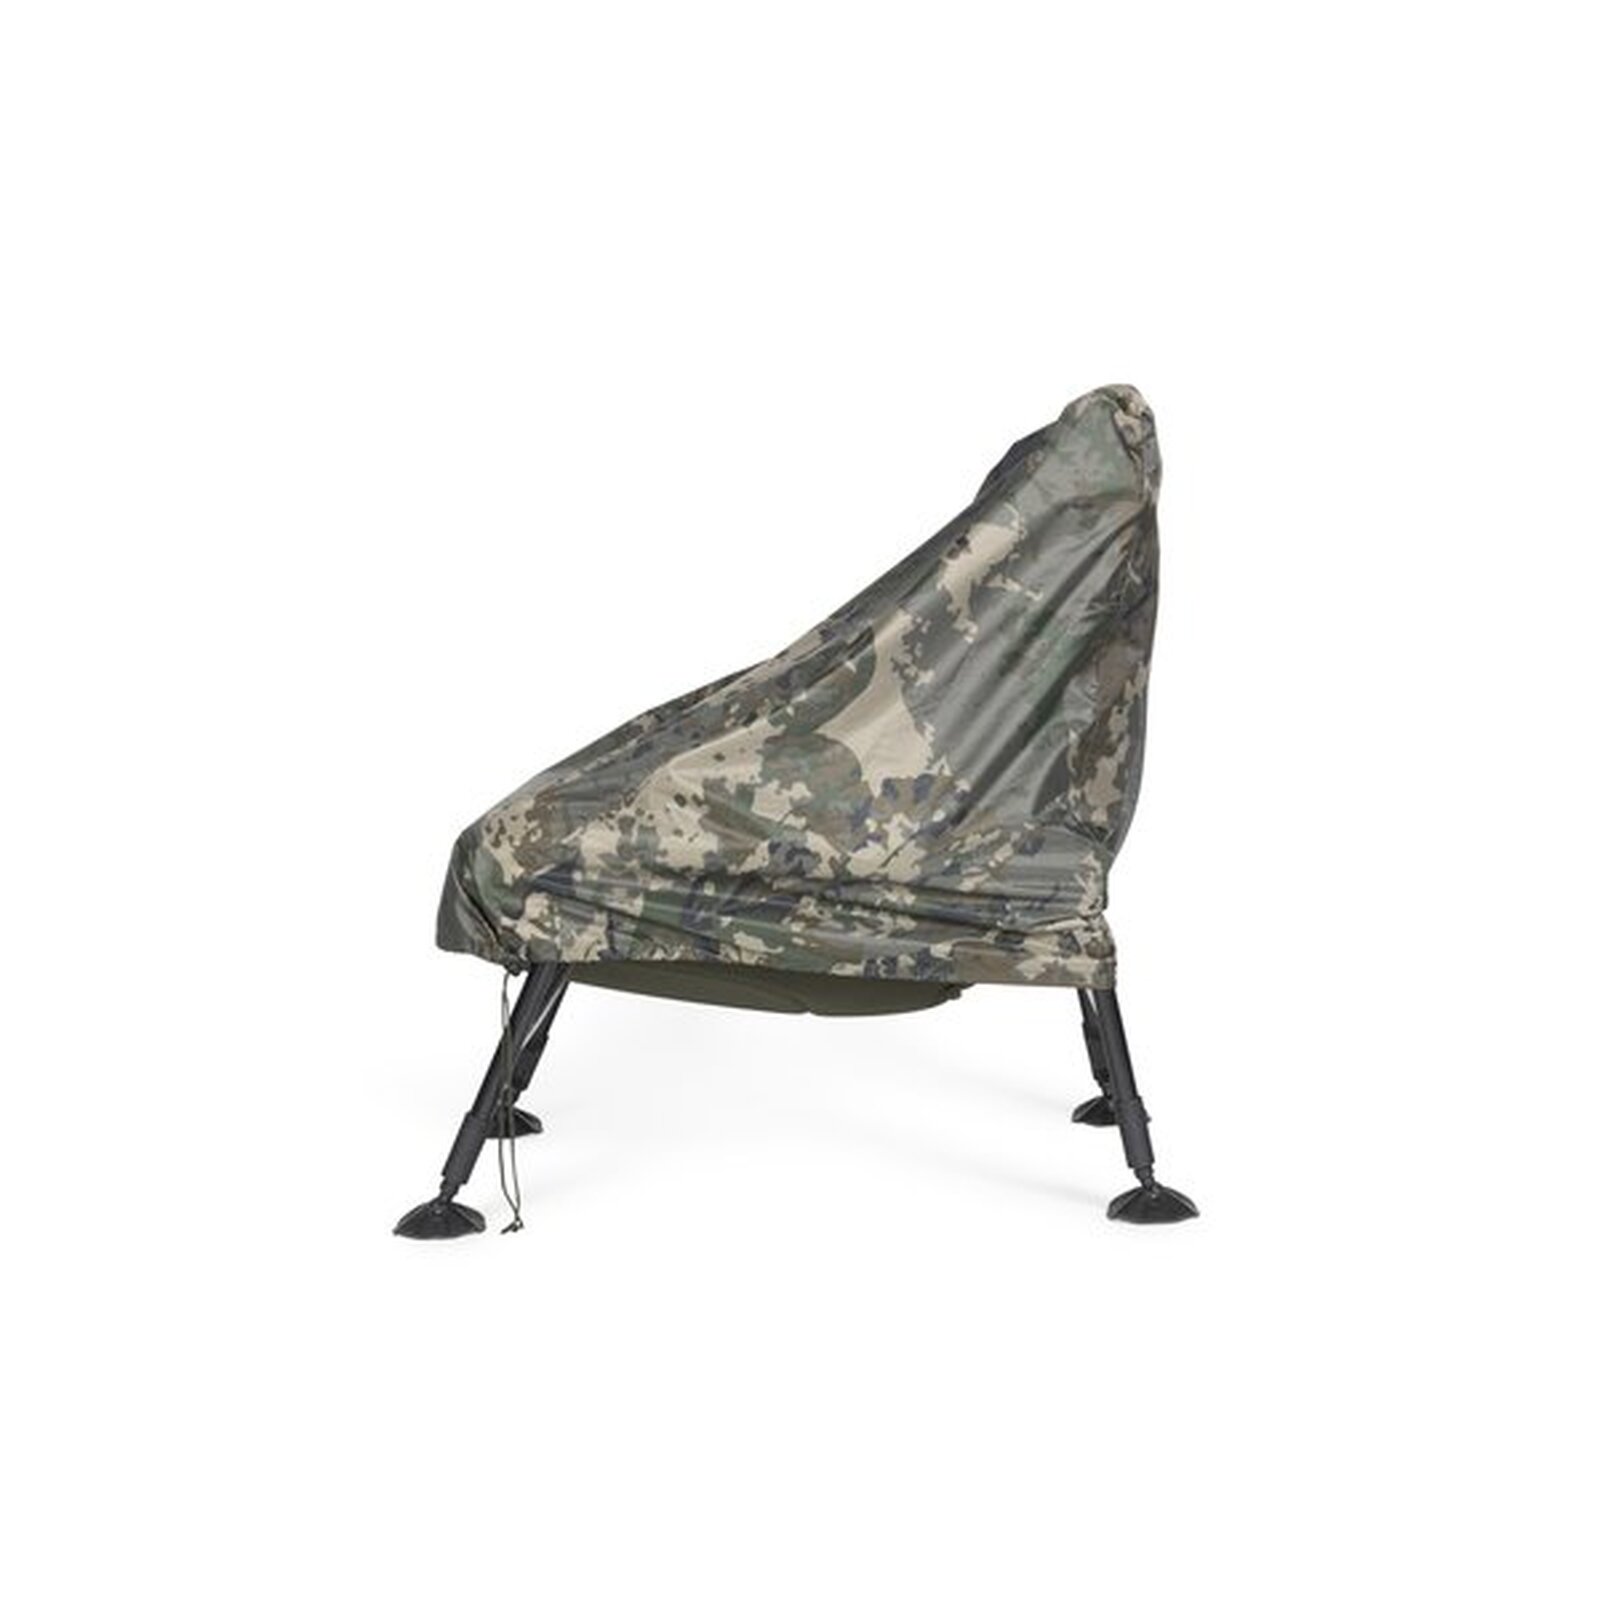 Nash Indulgence Universal Waterproof Chair Cover Camo